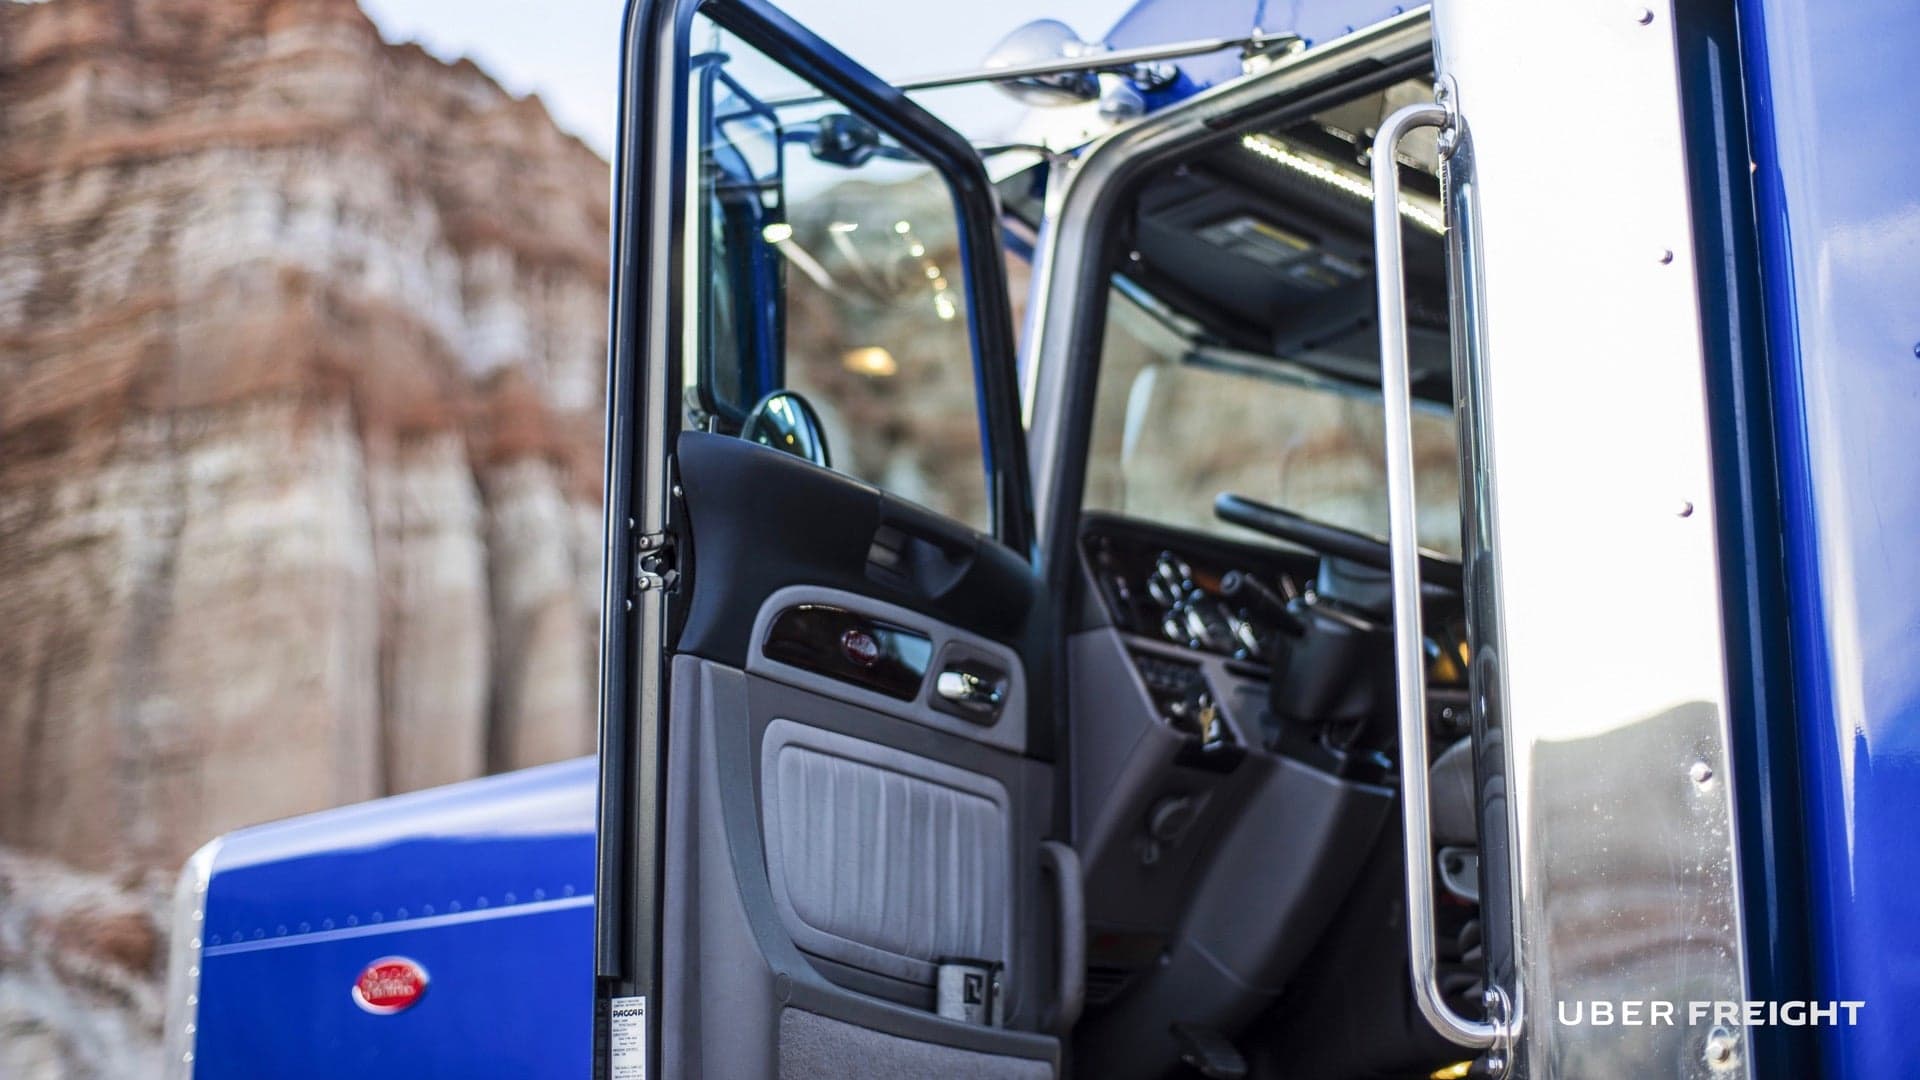 Uber Freight Trucking App Is Getting Overhauled